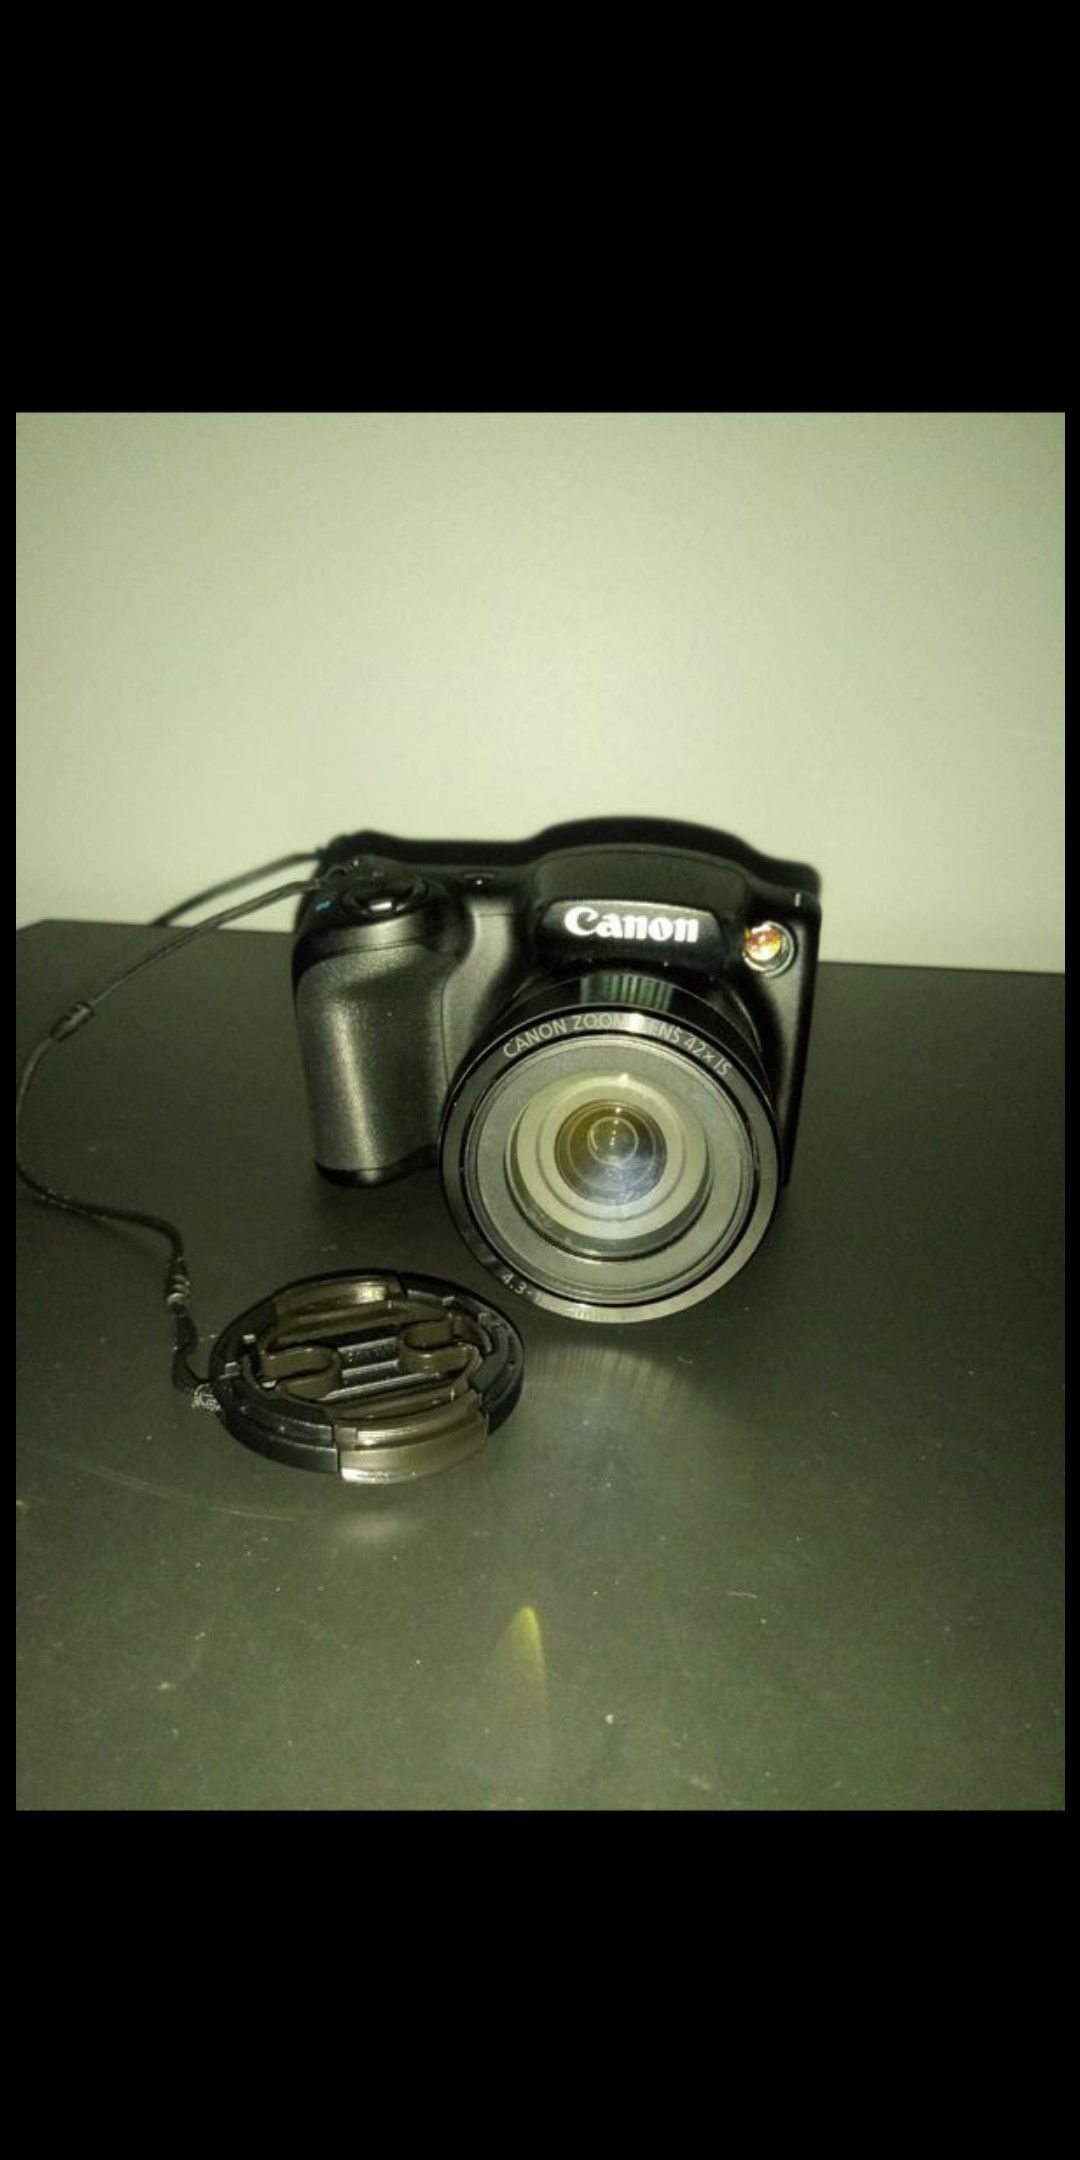 Canon PowerShot SX420 IS PLEASE READ POST